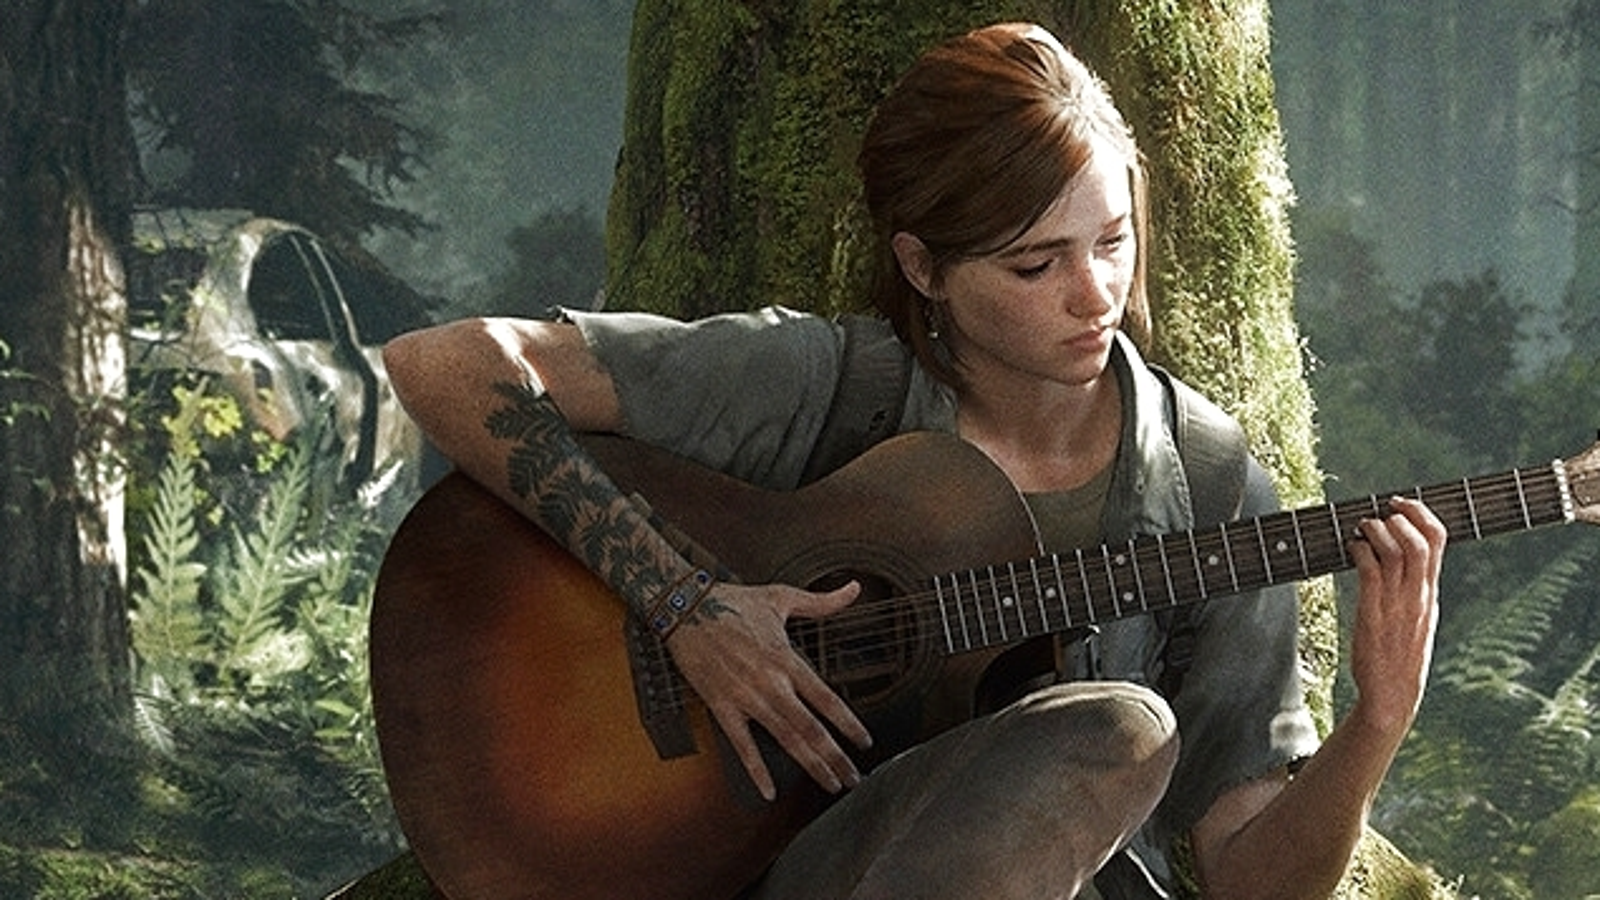 The Last of Us: Part 2 - Sony lança tema dinâmico e wallpapers